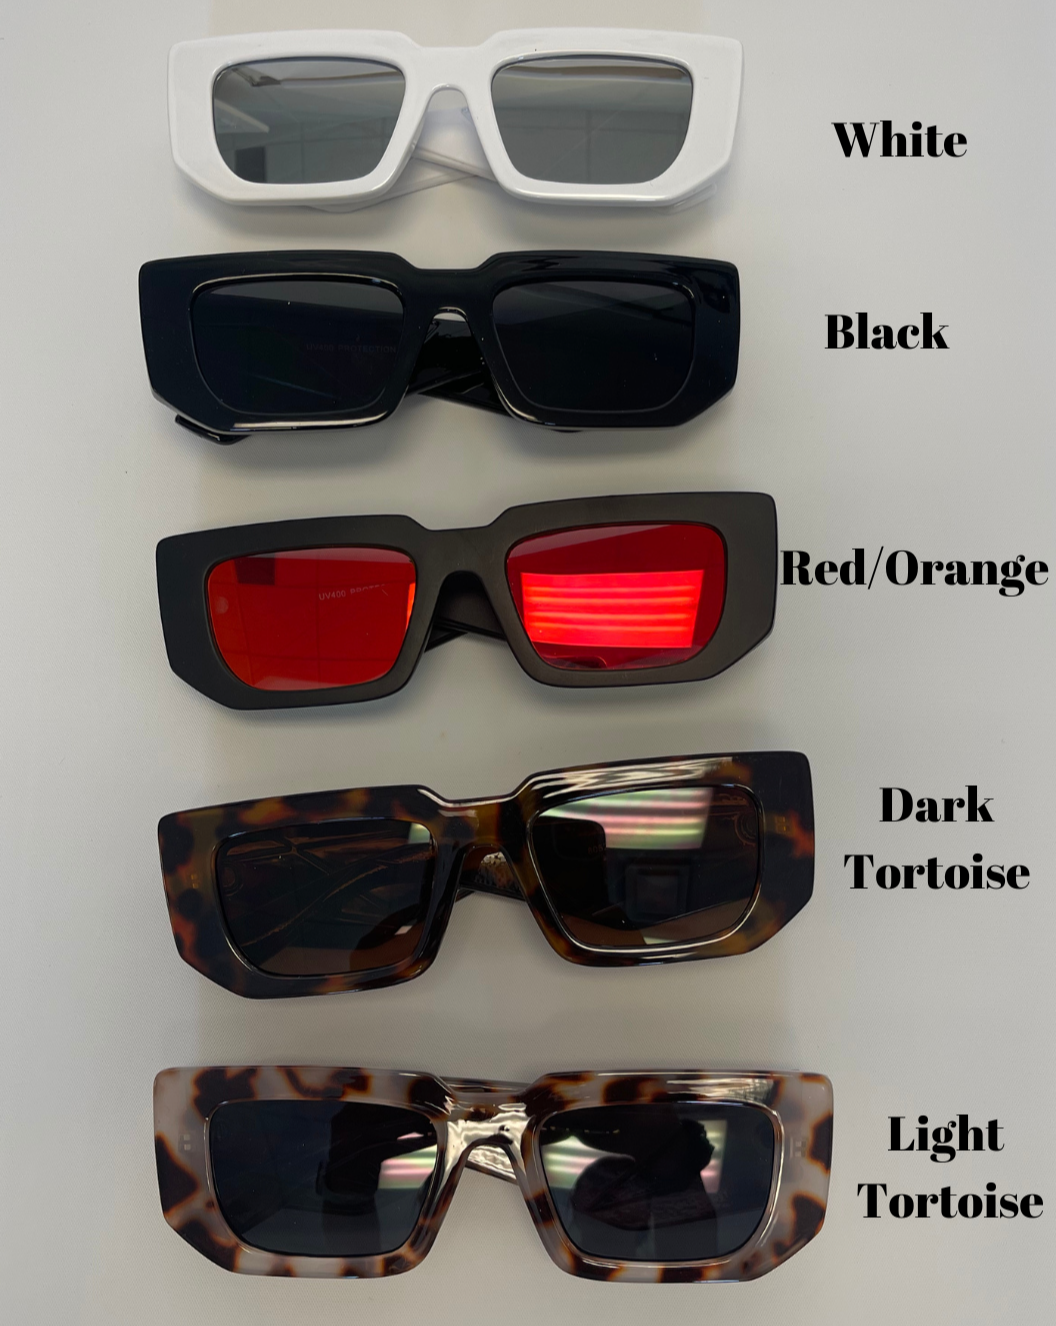 The Cateye Sunglasses